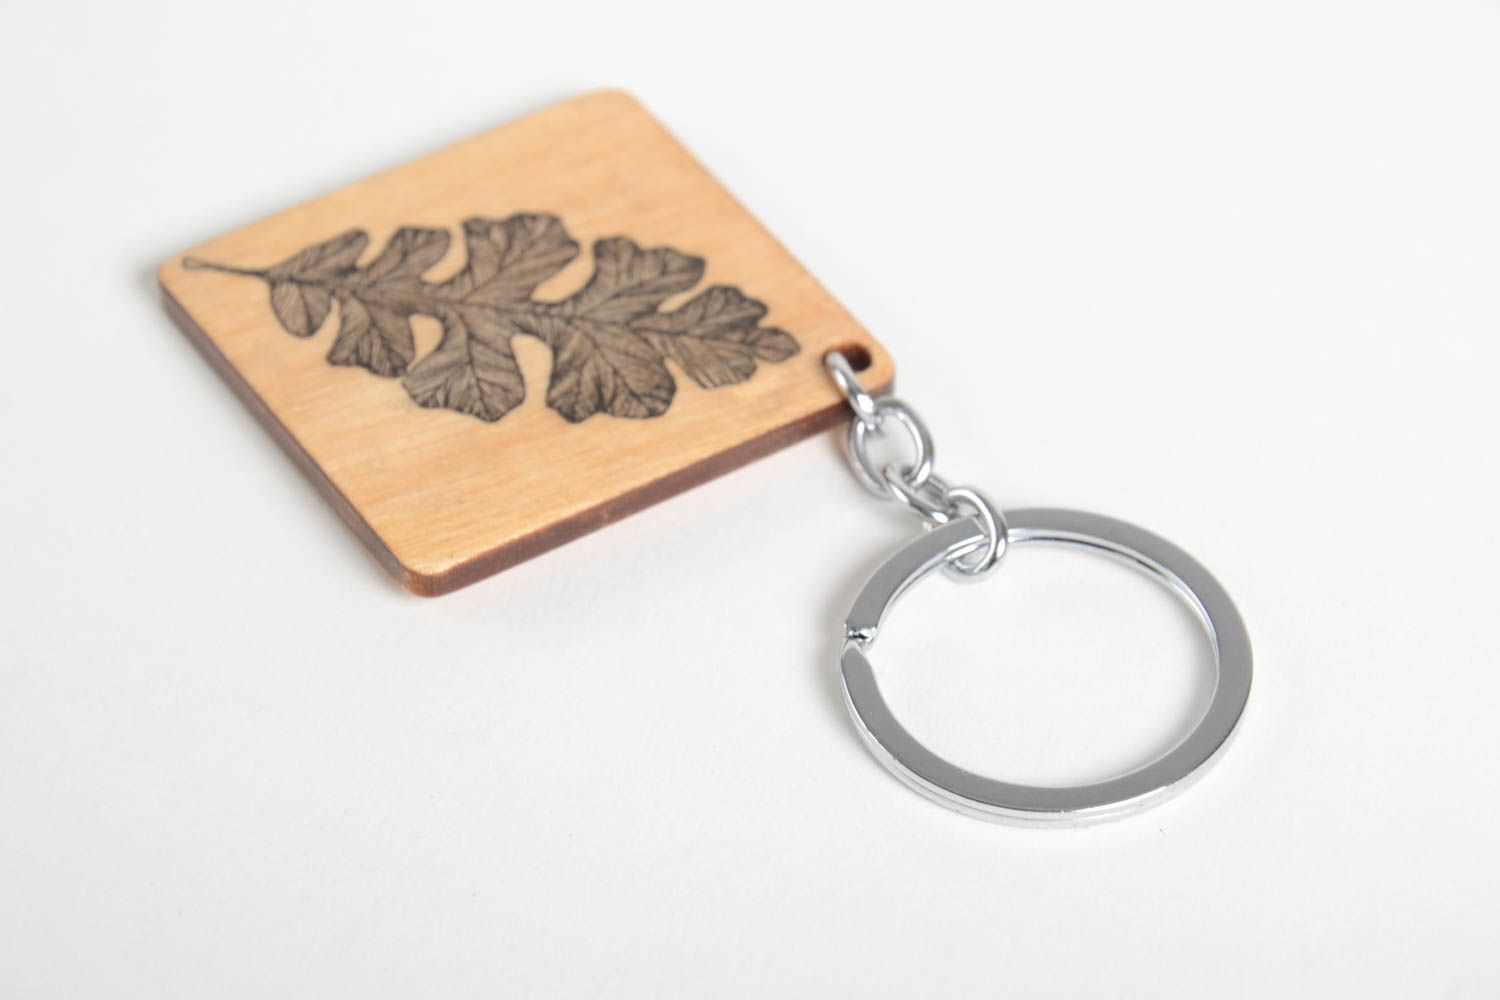 Handmade keychain unusual keychain for phone gift ideas wooden souvenir photo 4